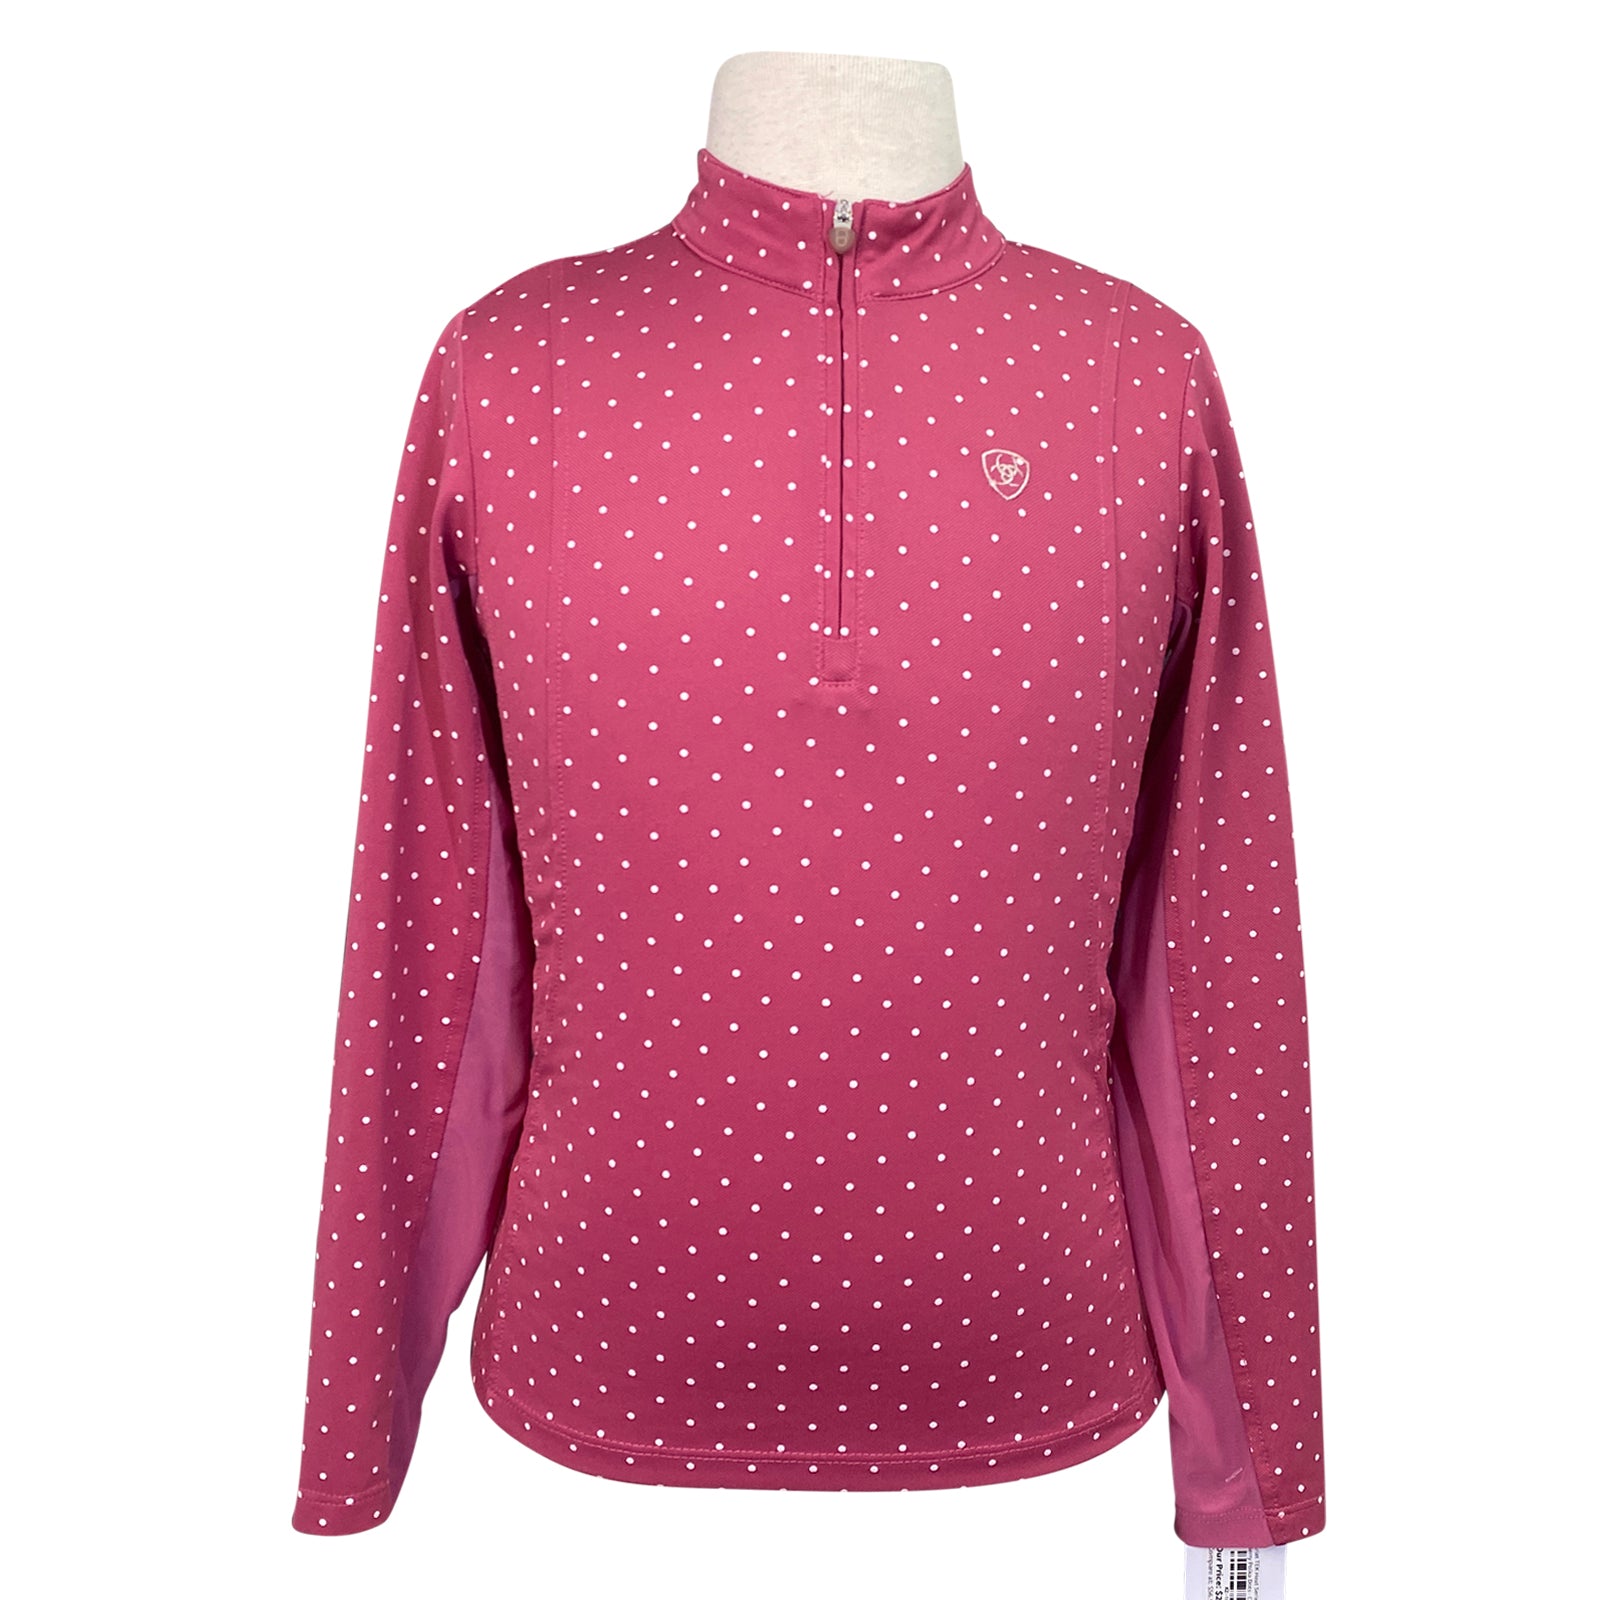 Ariat TEK Heat Series Long Sleeve Shirt in Pink Polka Dot